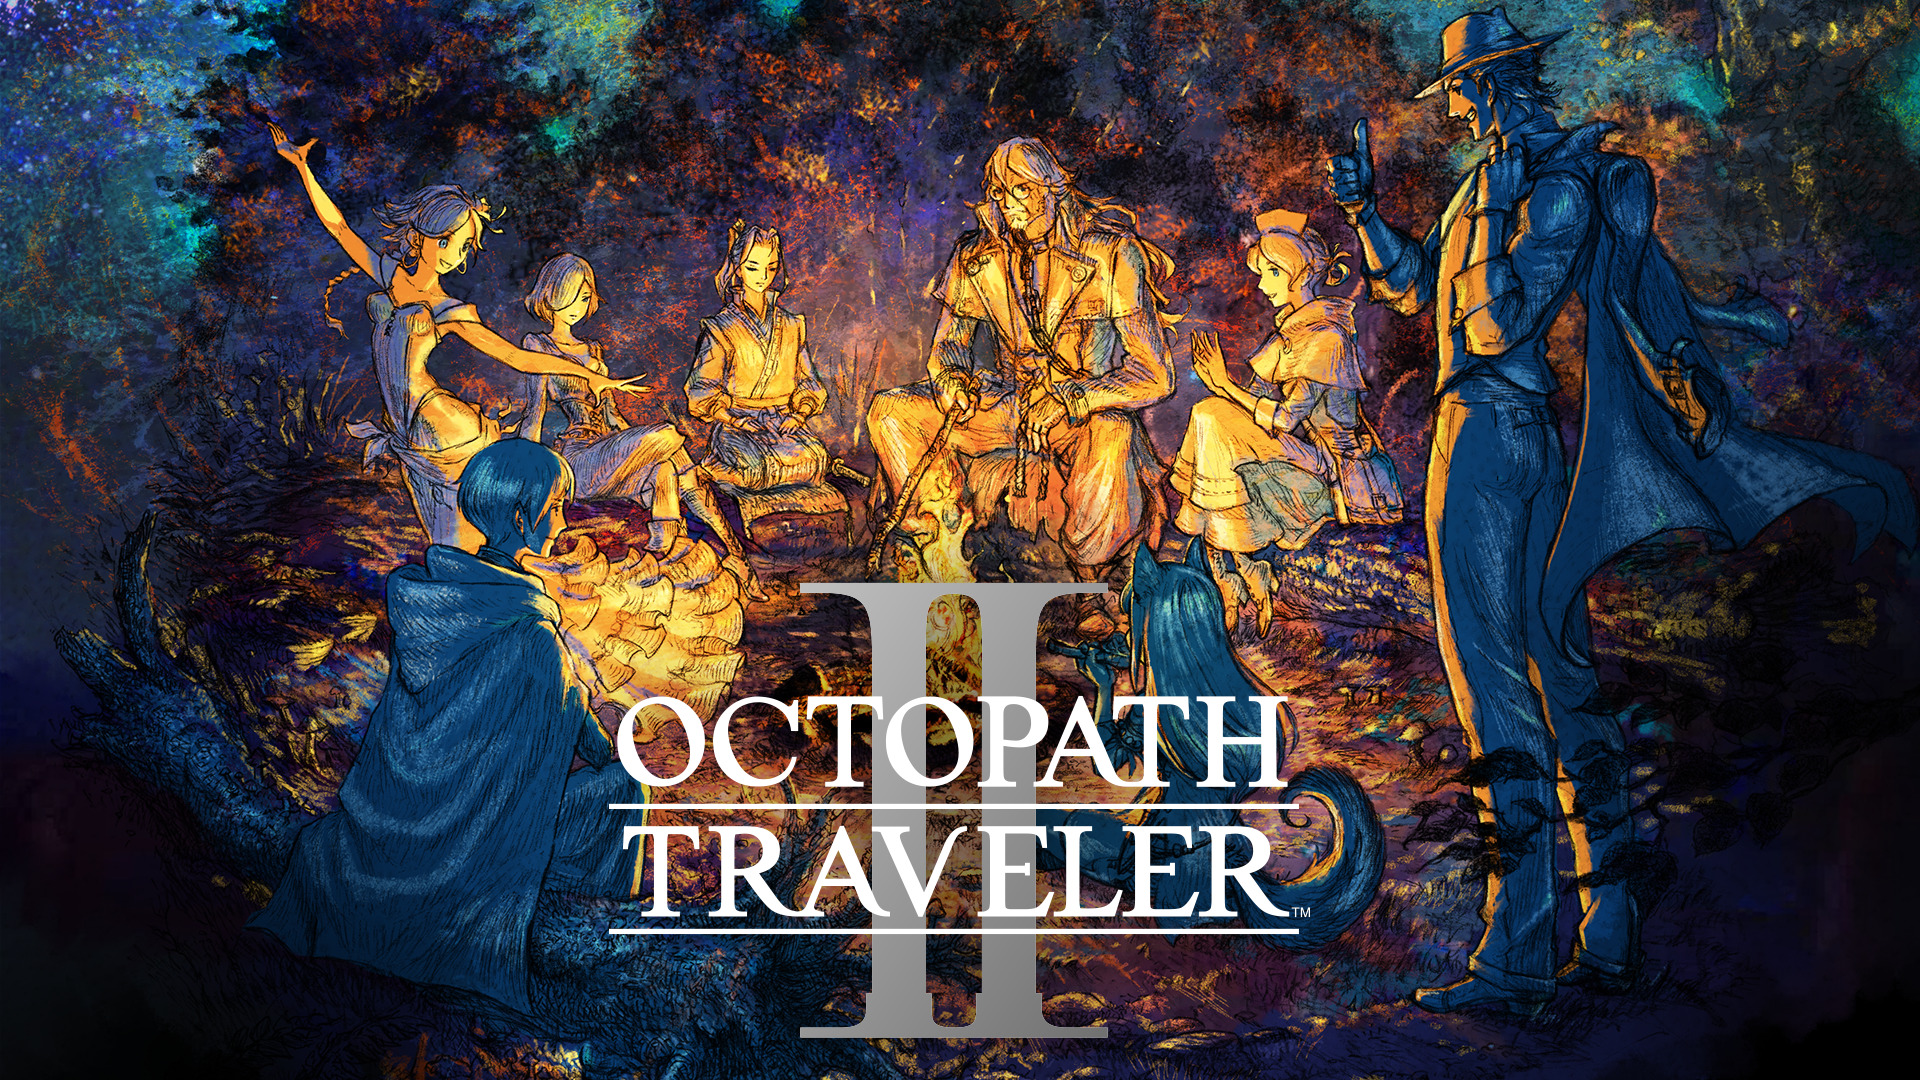 Octopath Traveler 2 reviews